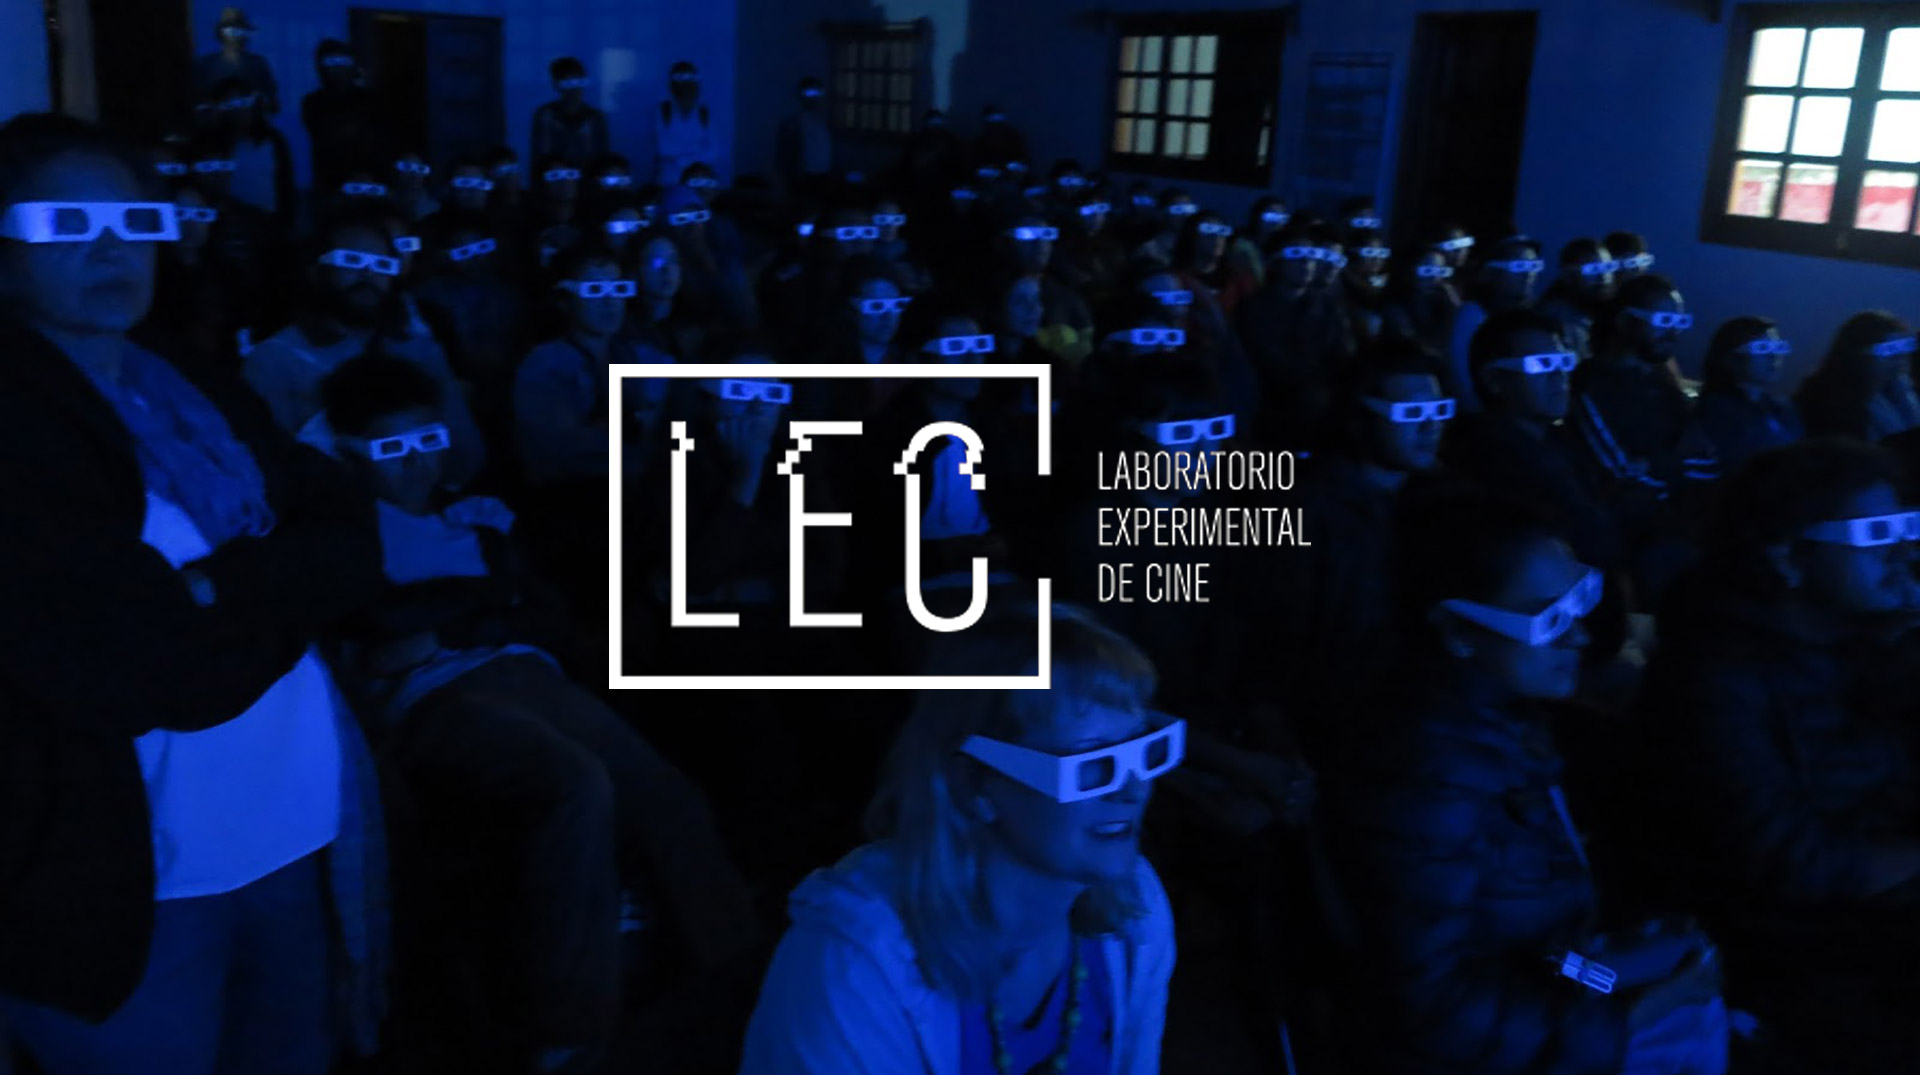 LEC Laboratorio Experimental de Cine